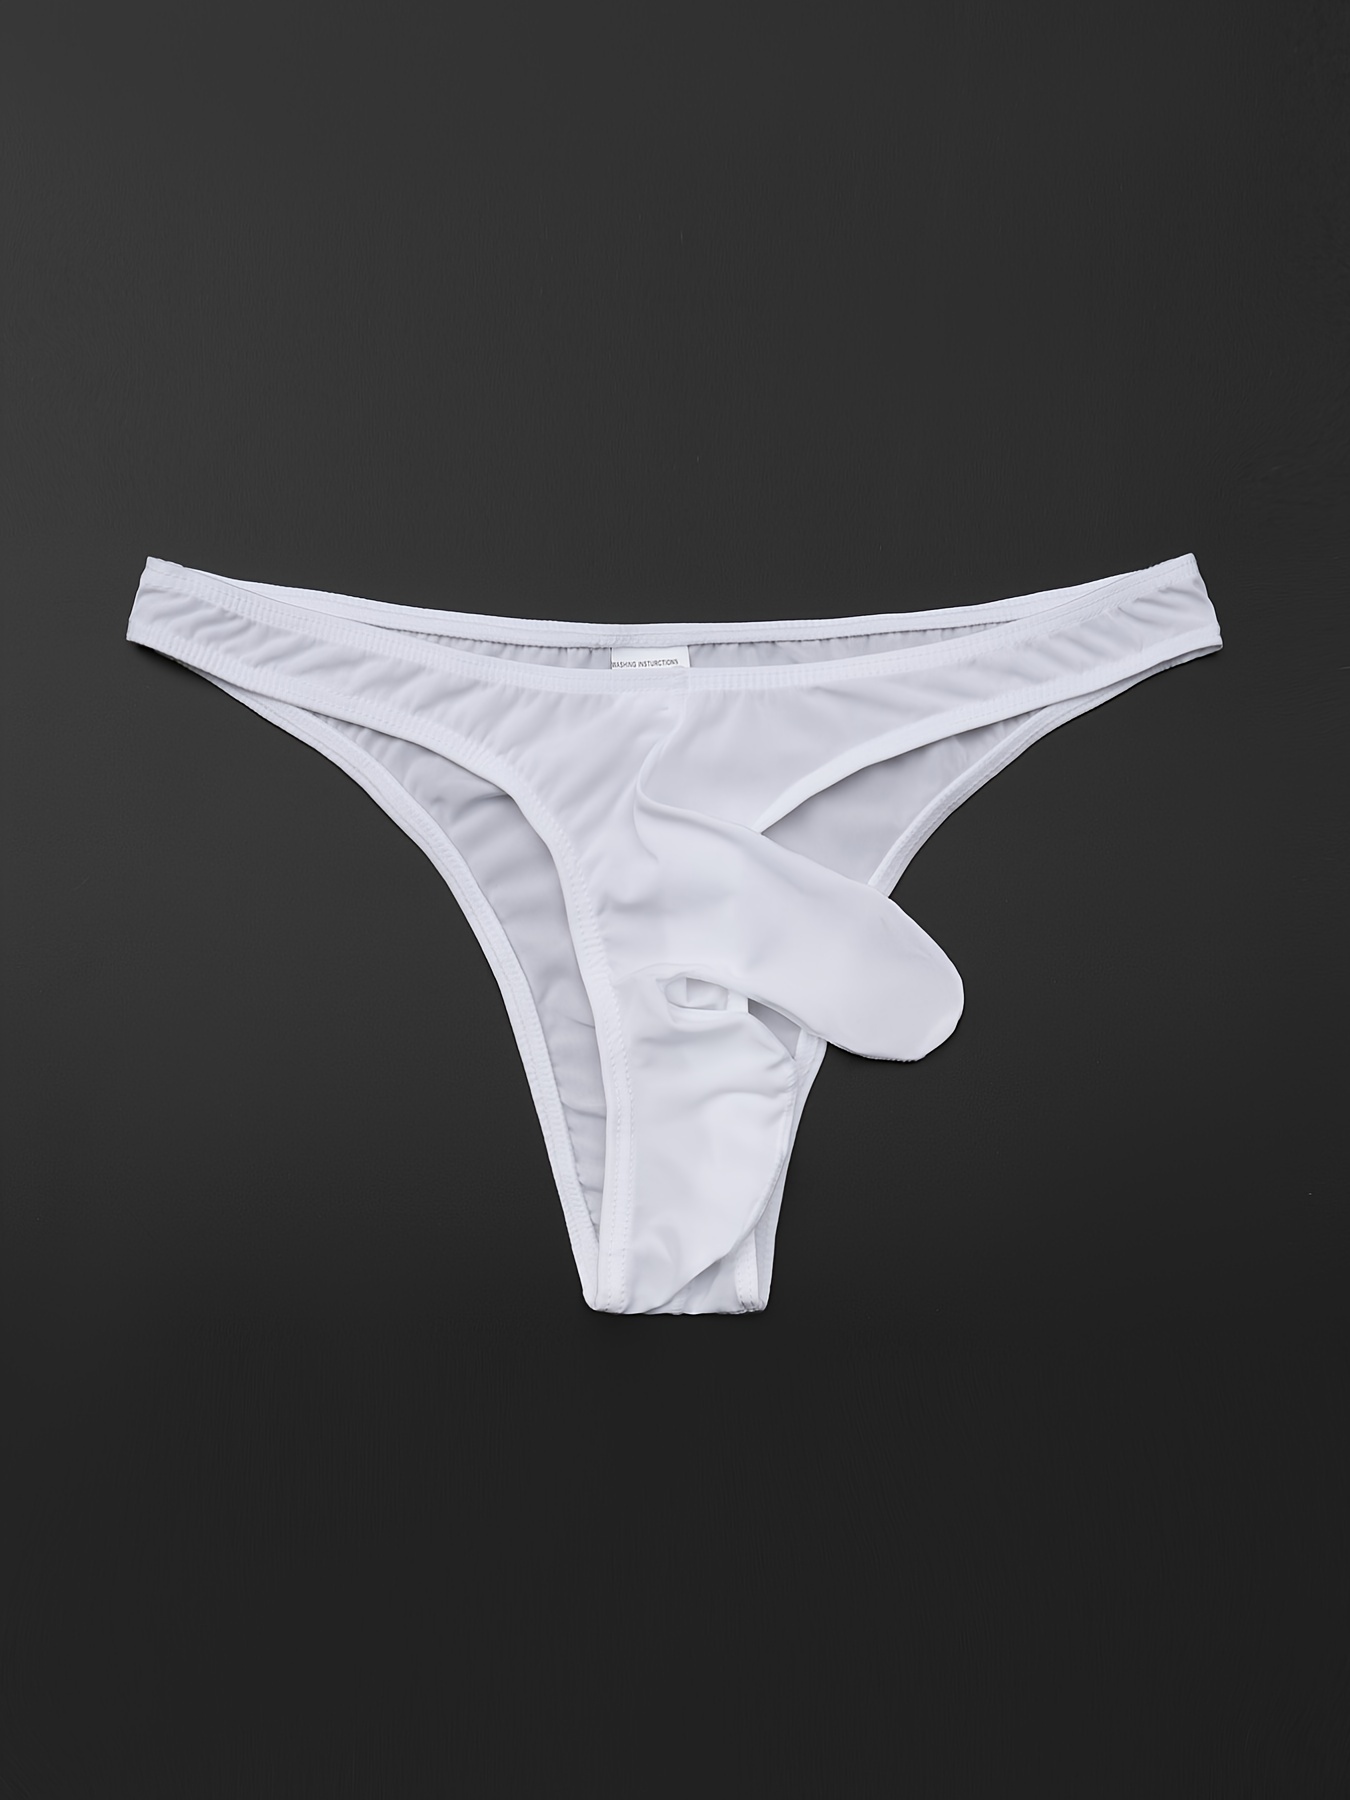 1pc Sexy Men's Underwear Elephant Thong, Cartoon Role Play Style